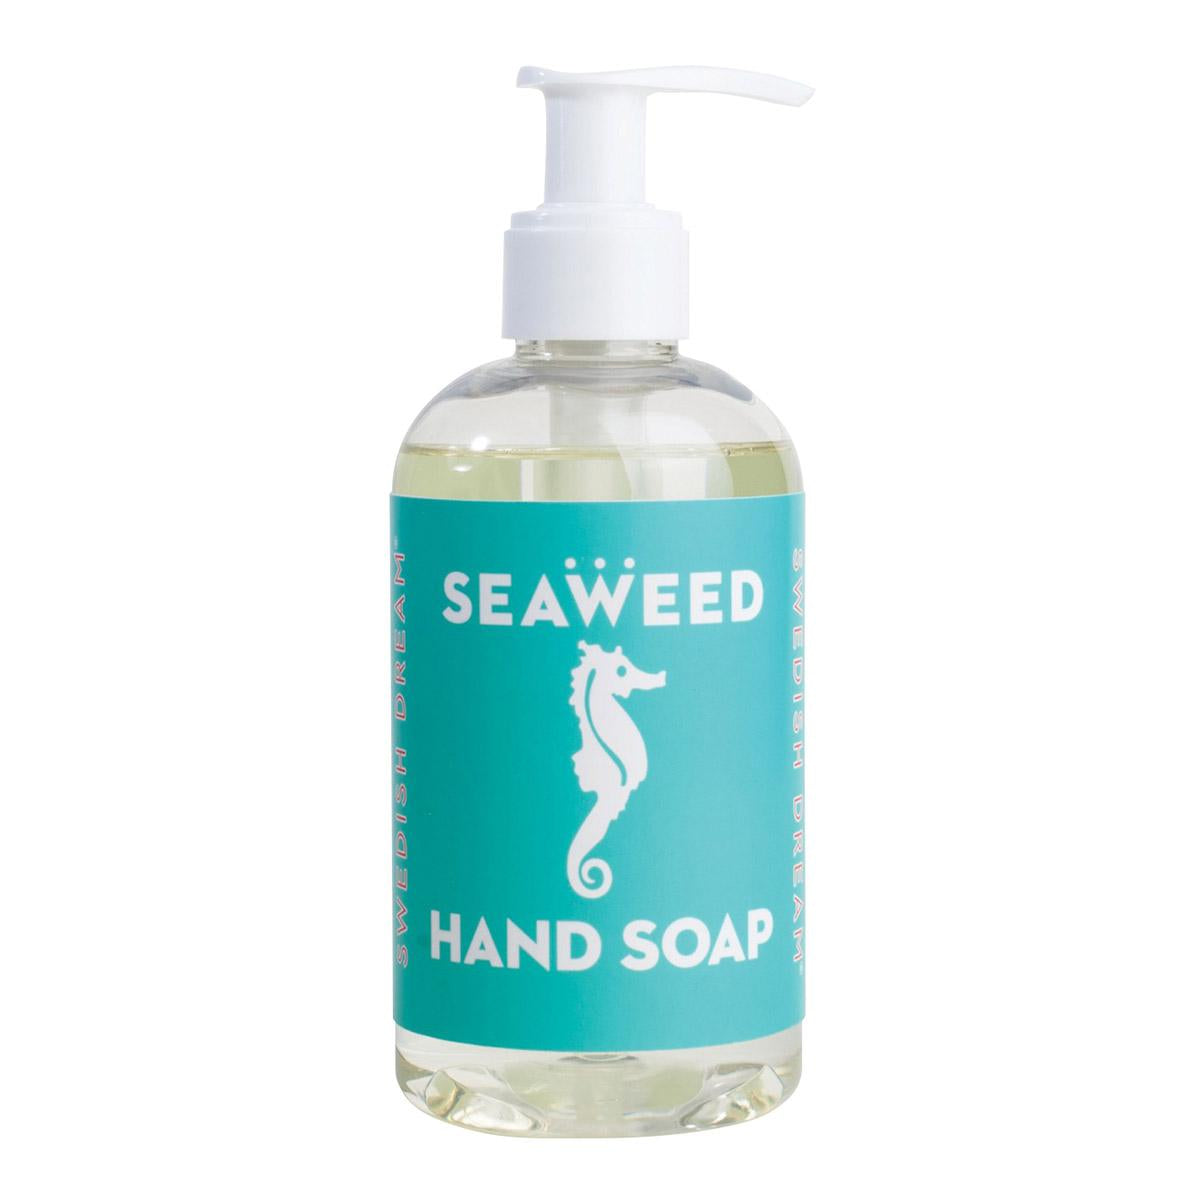 Primary image of Swedish Dream Seaweed Liquid Hand Soap